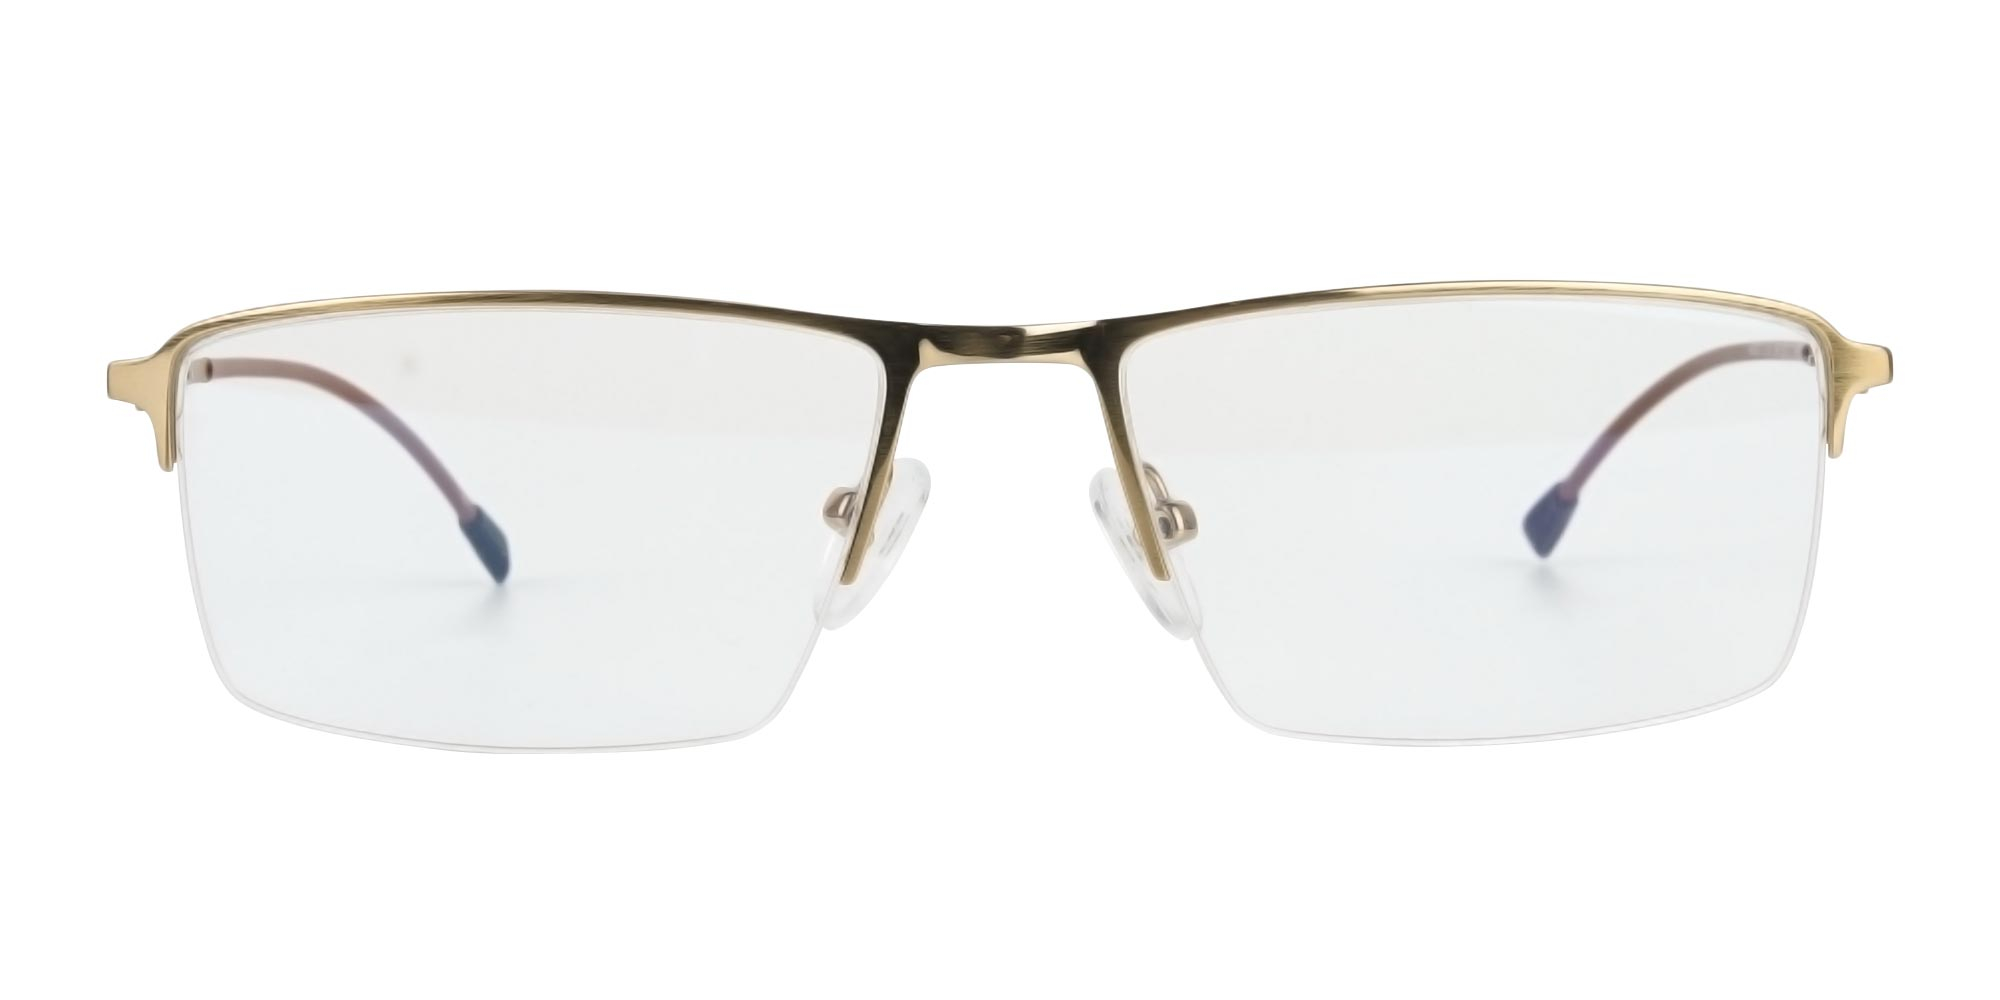 Gold Semi-Rim Glasses with Spring Hinges-1